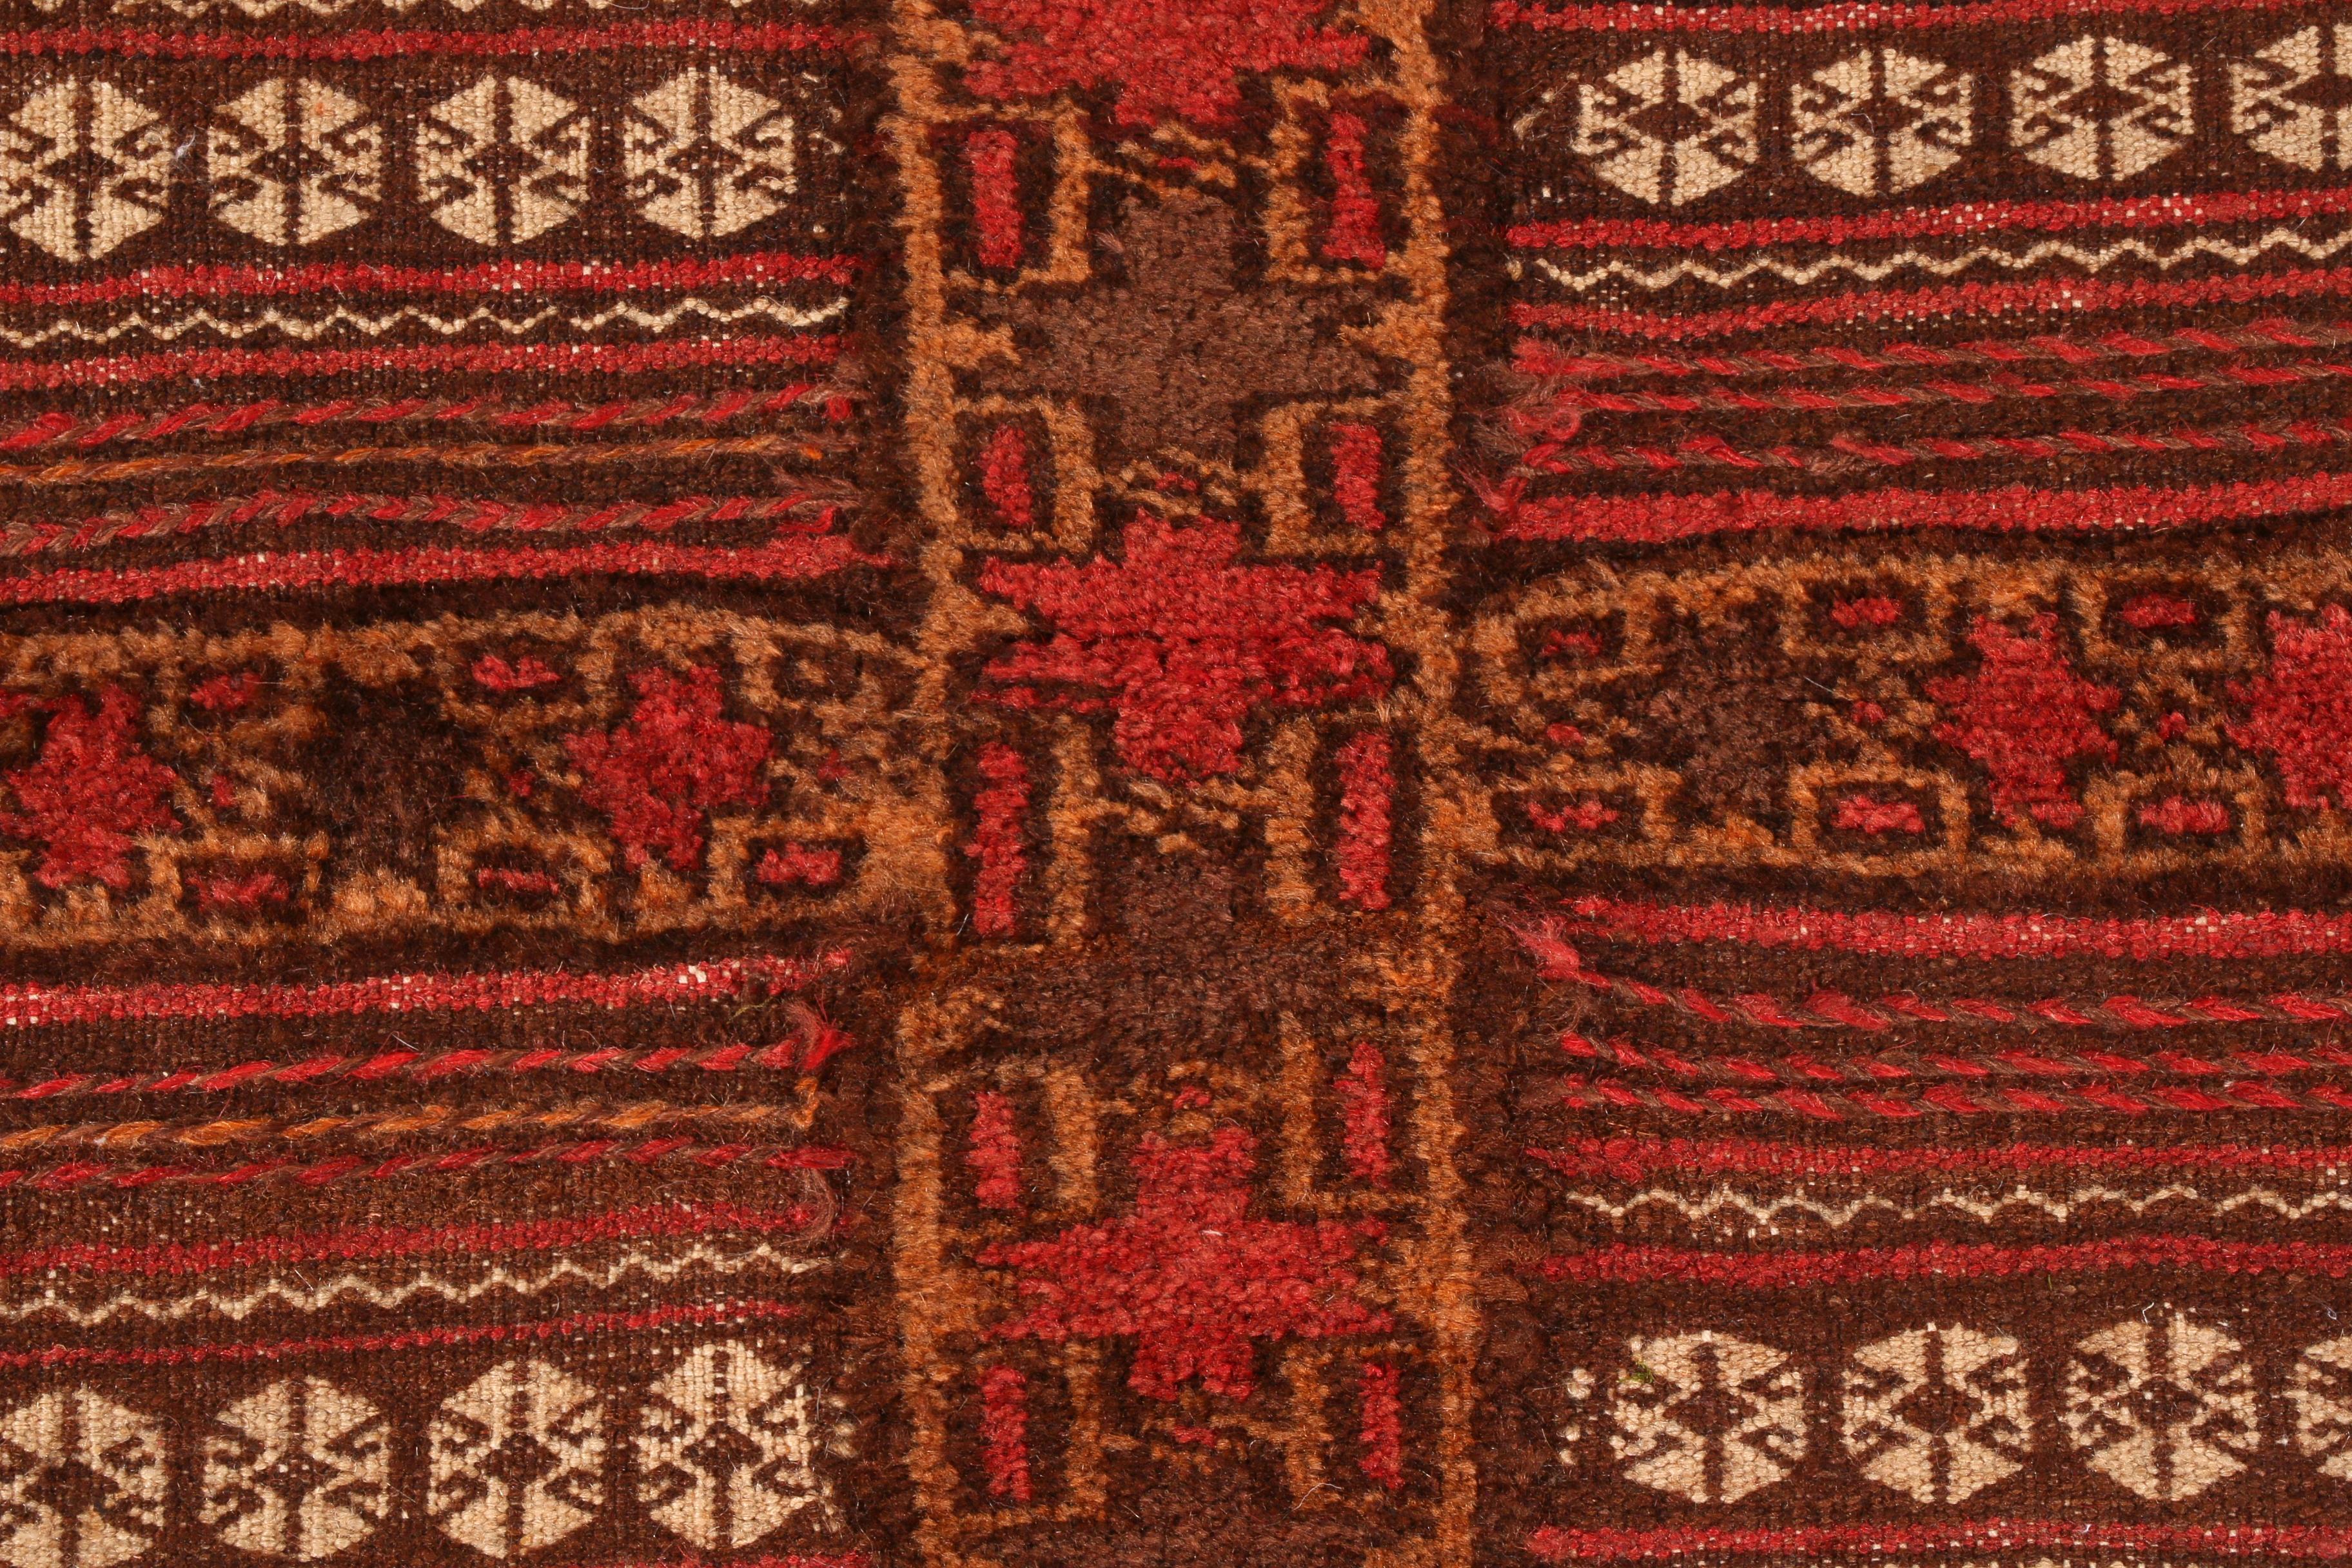 Afghan Antique Geometric Red and Brown Wool Kilim Rug by Rug & Kilim For Sale